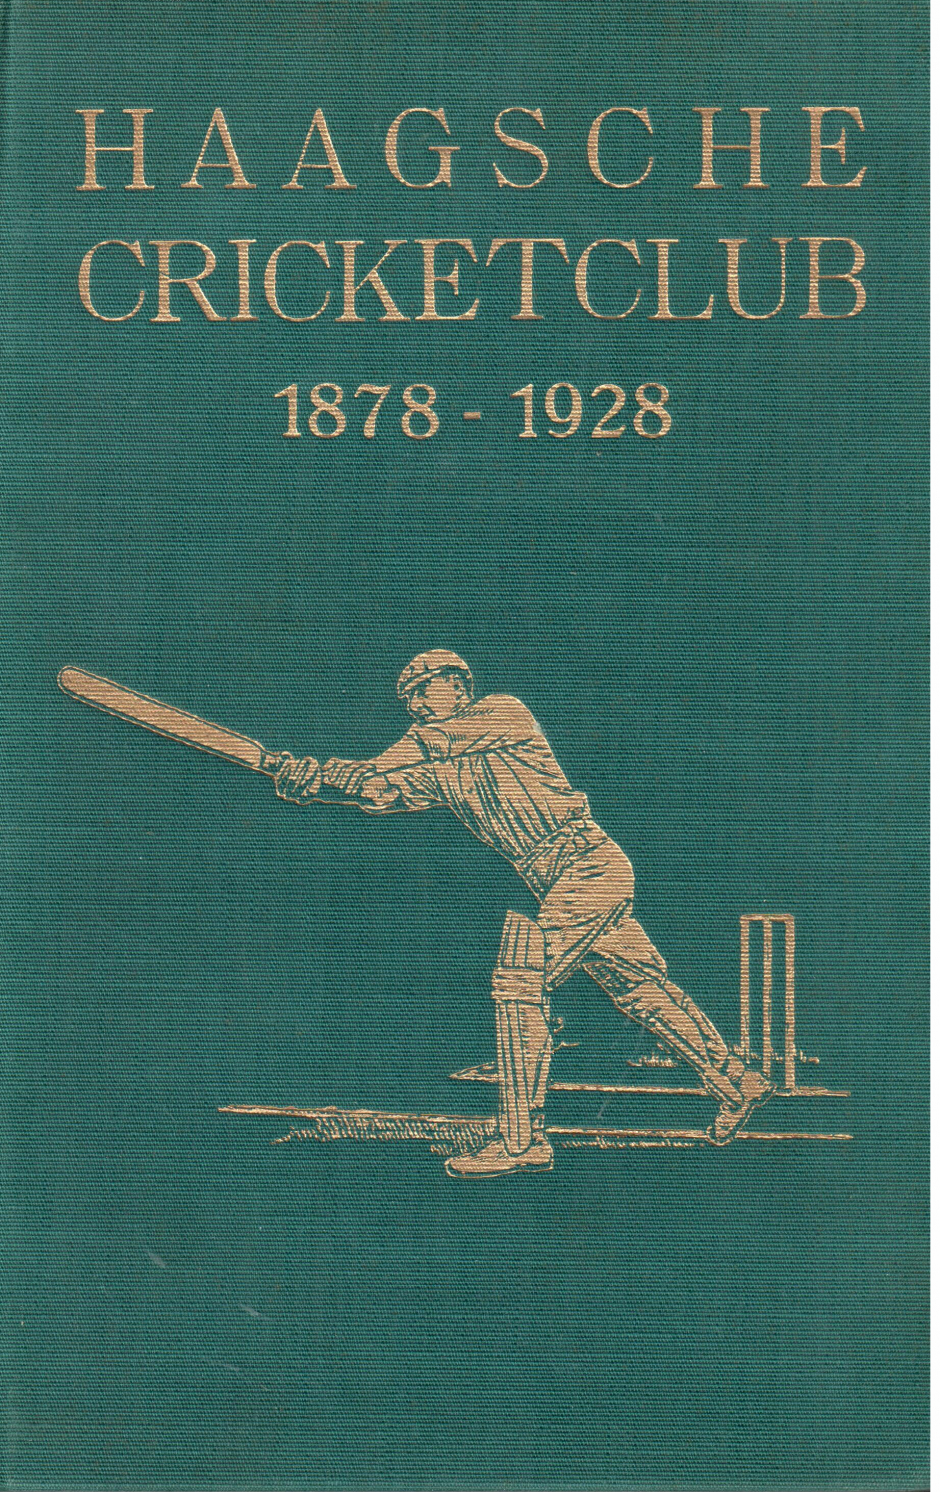 Haagsche Cricket Club 1878-1928﻿